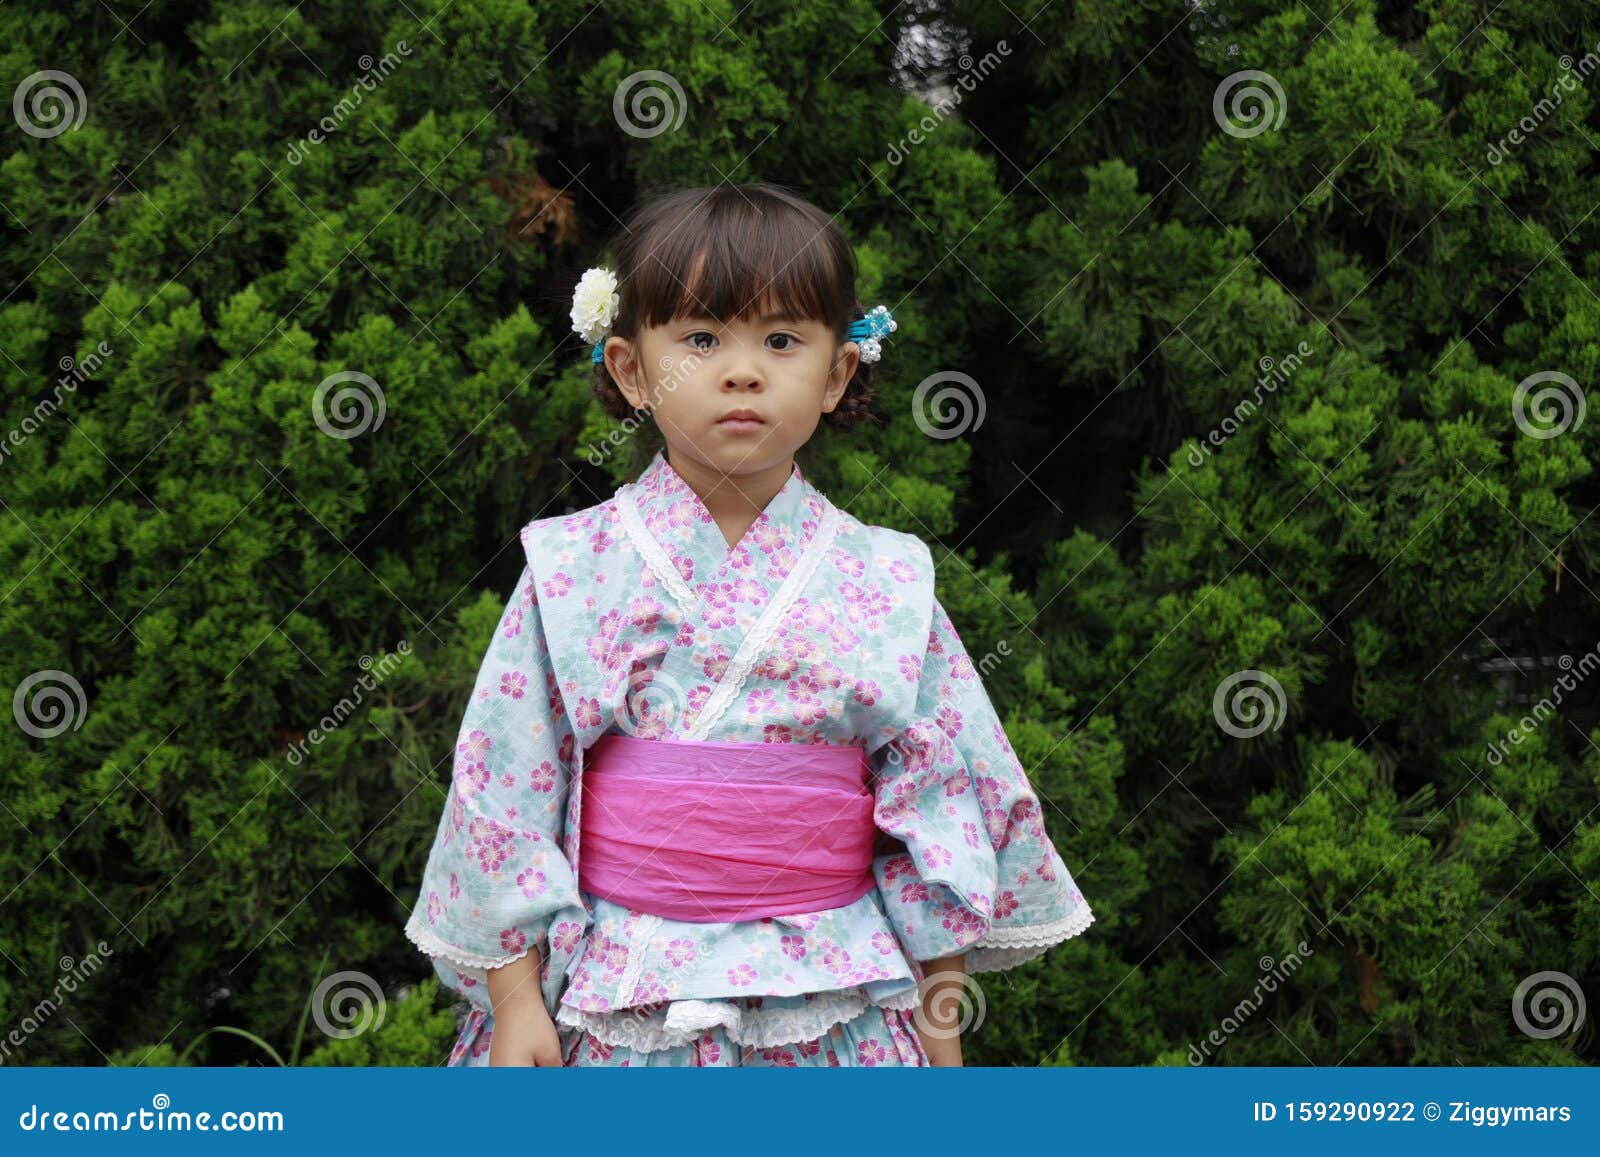 Japanese Girl in Yukata, Japanese Traditional Night Clothes Stock Photo ...